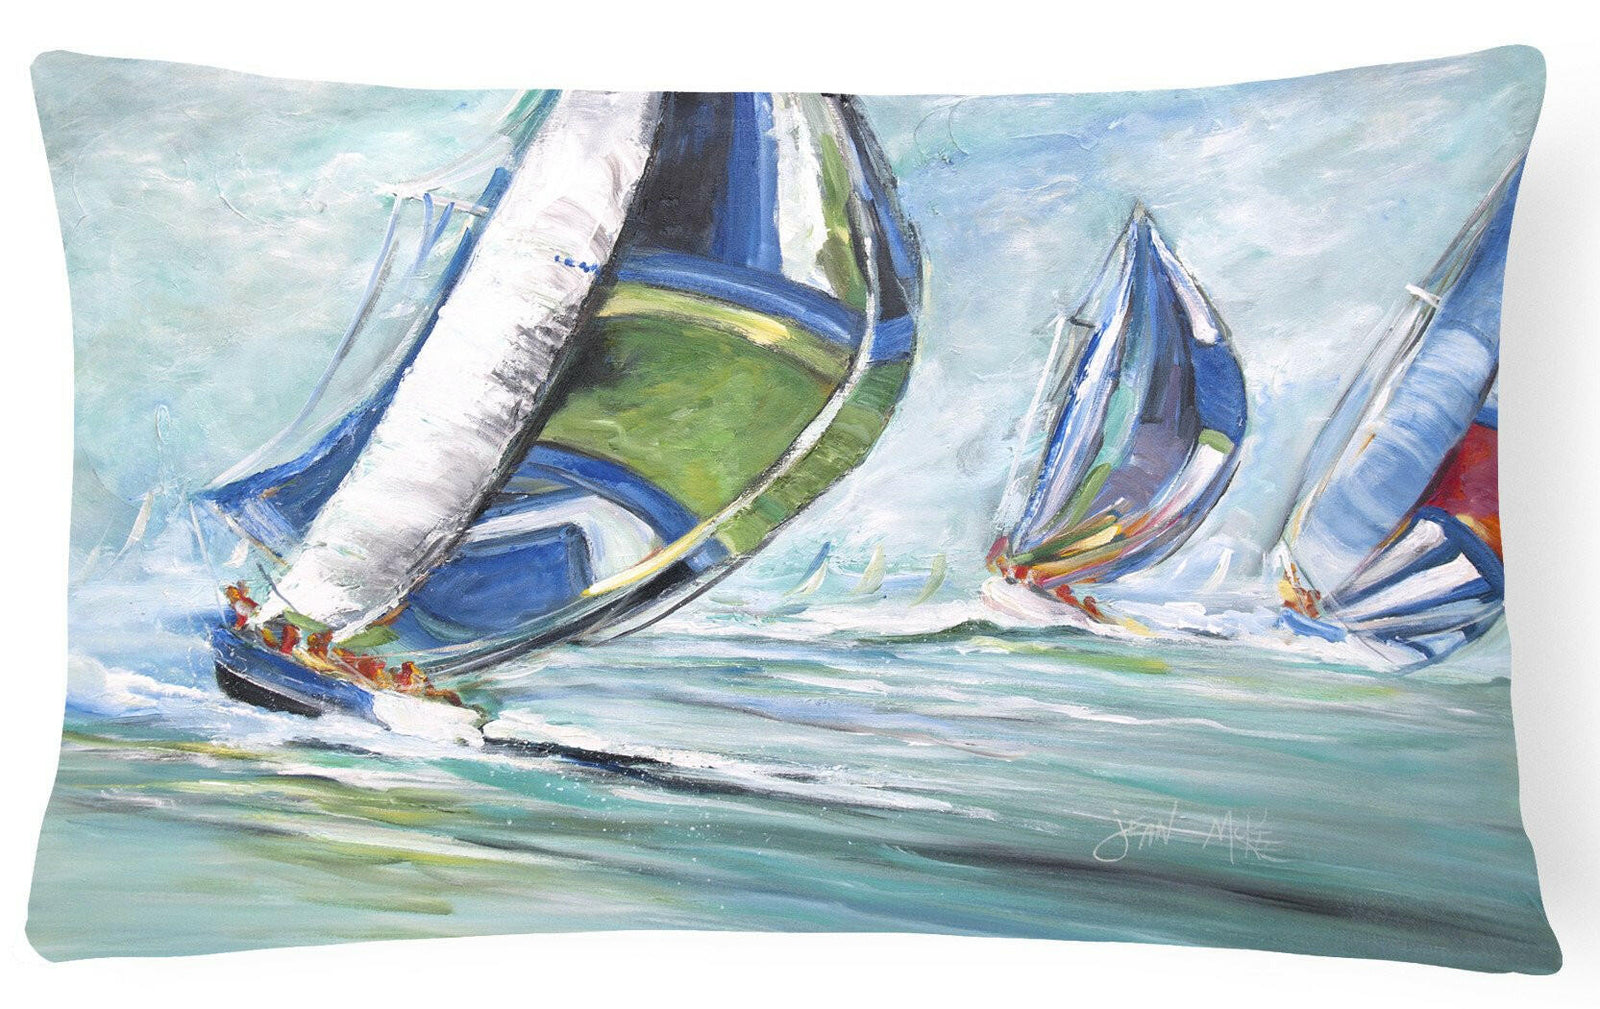 Boat Race Canvas Fabric Decorative Pillow JMK1030PW1216 by Caroline's Treasures